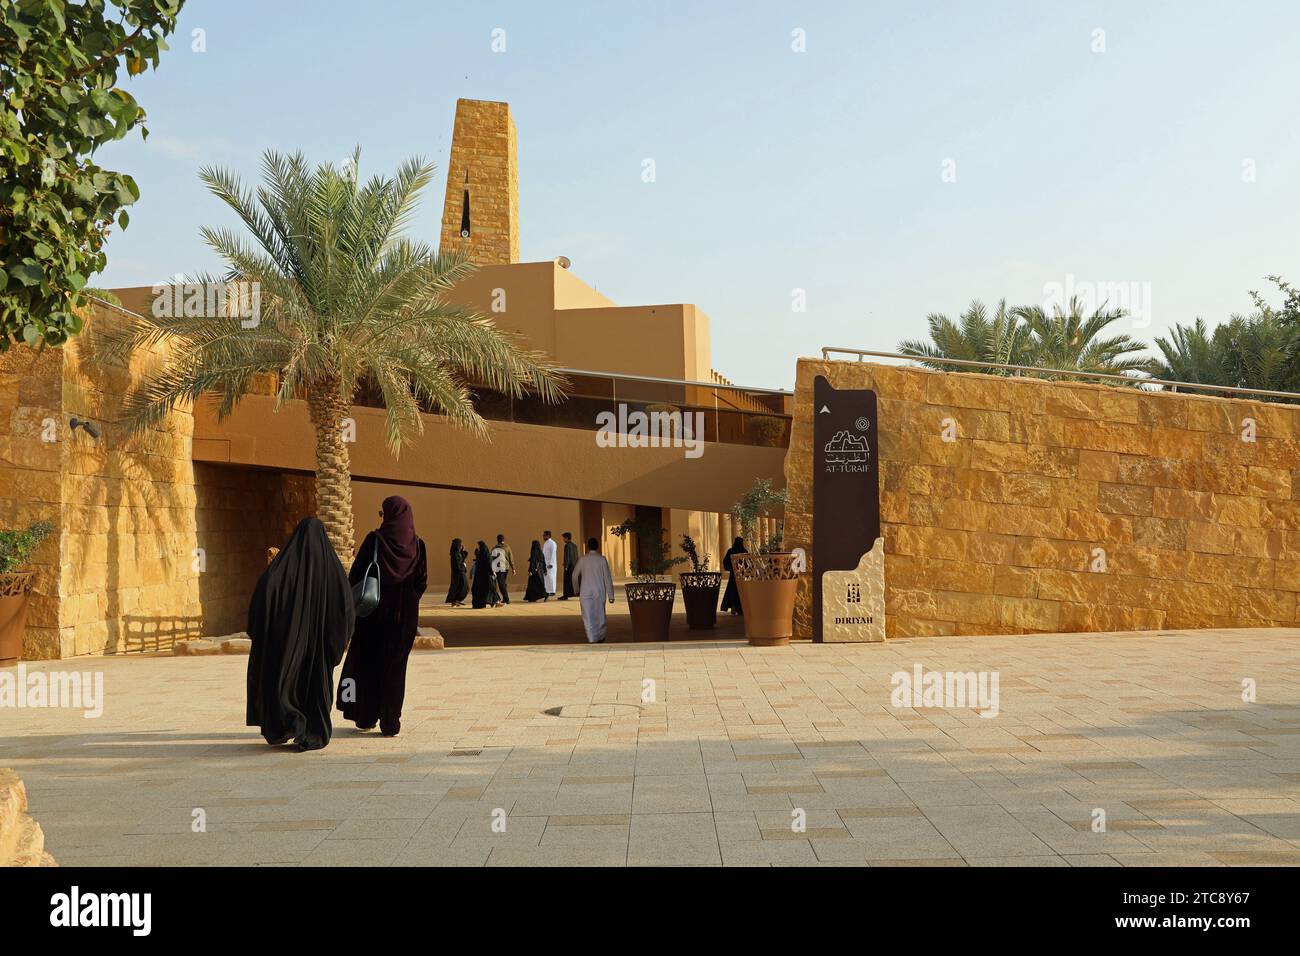 People at the popular destination of Diriyah at Riyadh in Saudi Arabia Stock Photo